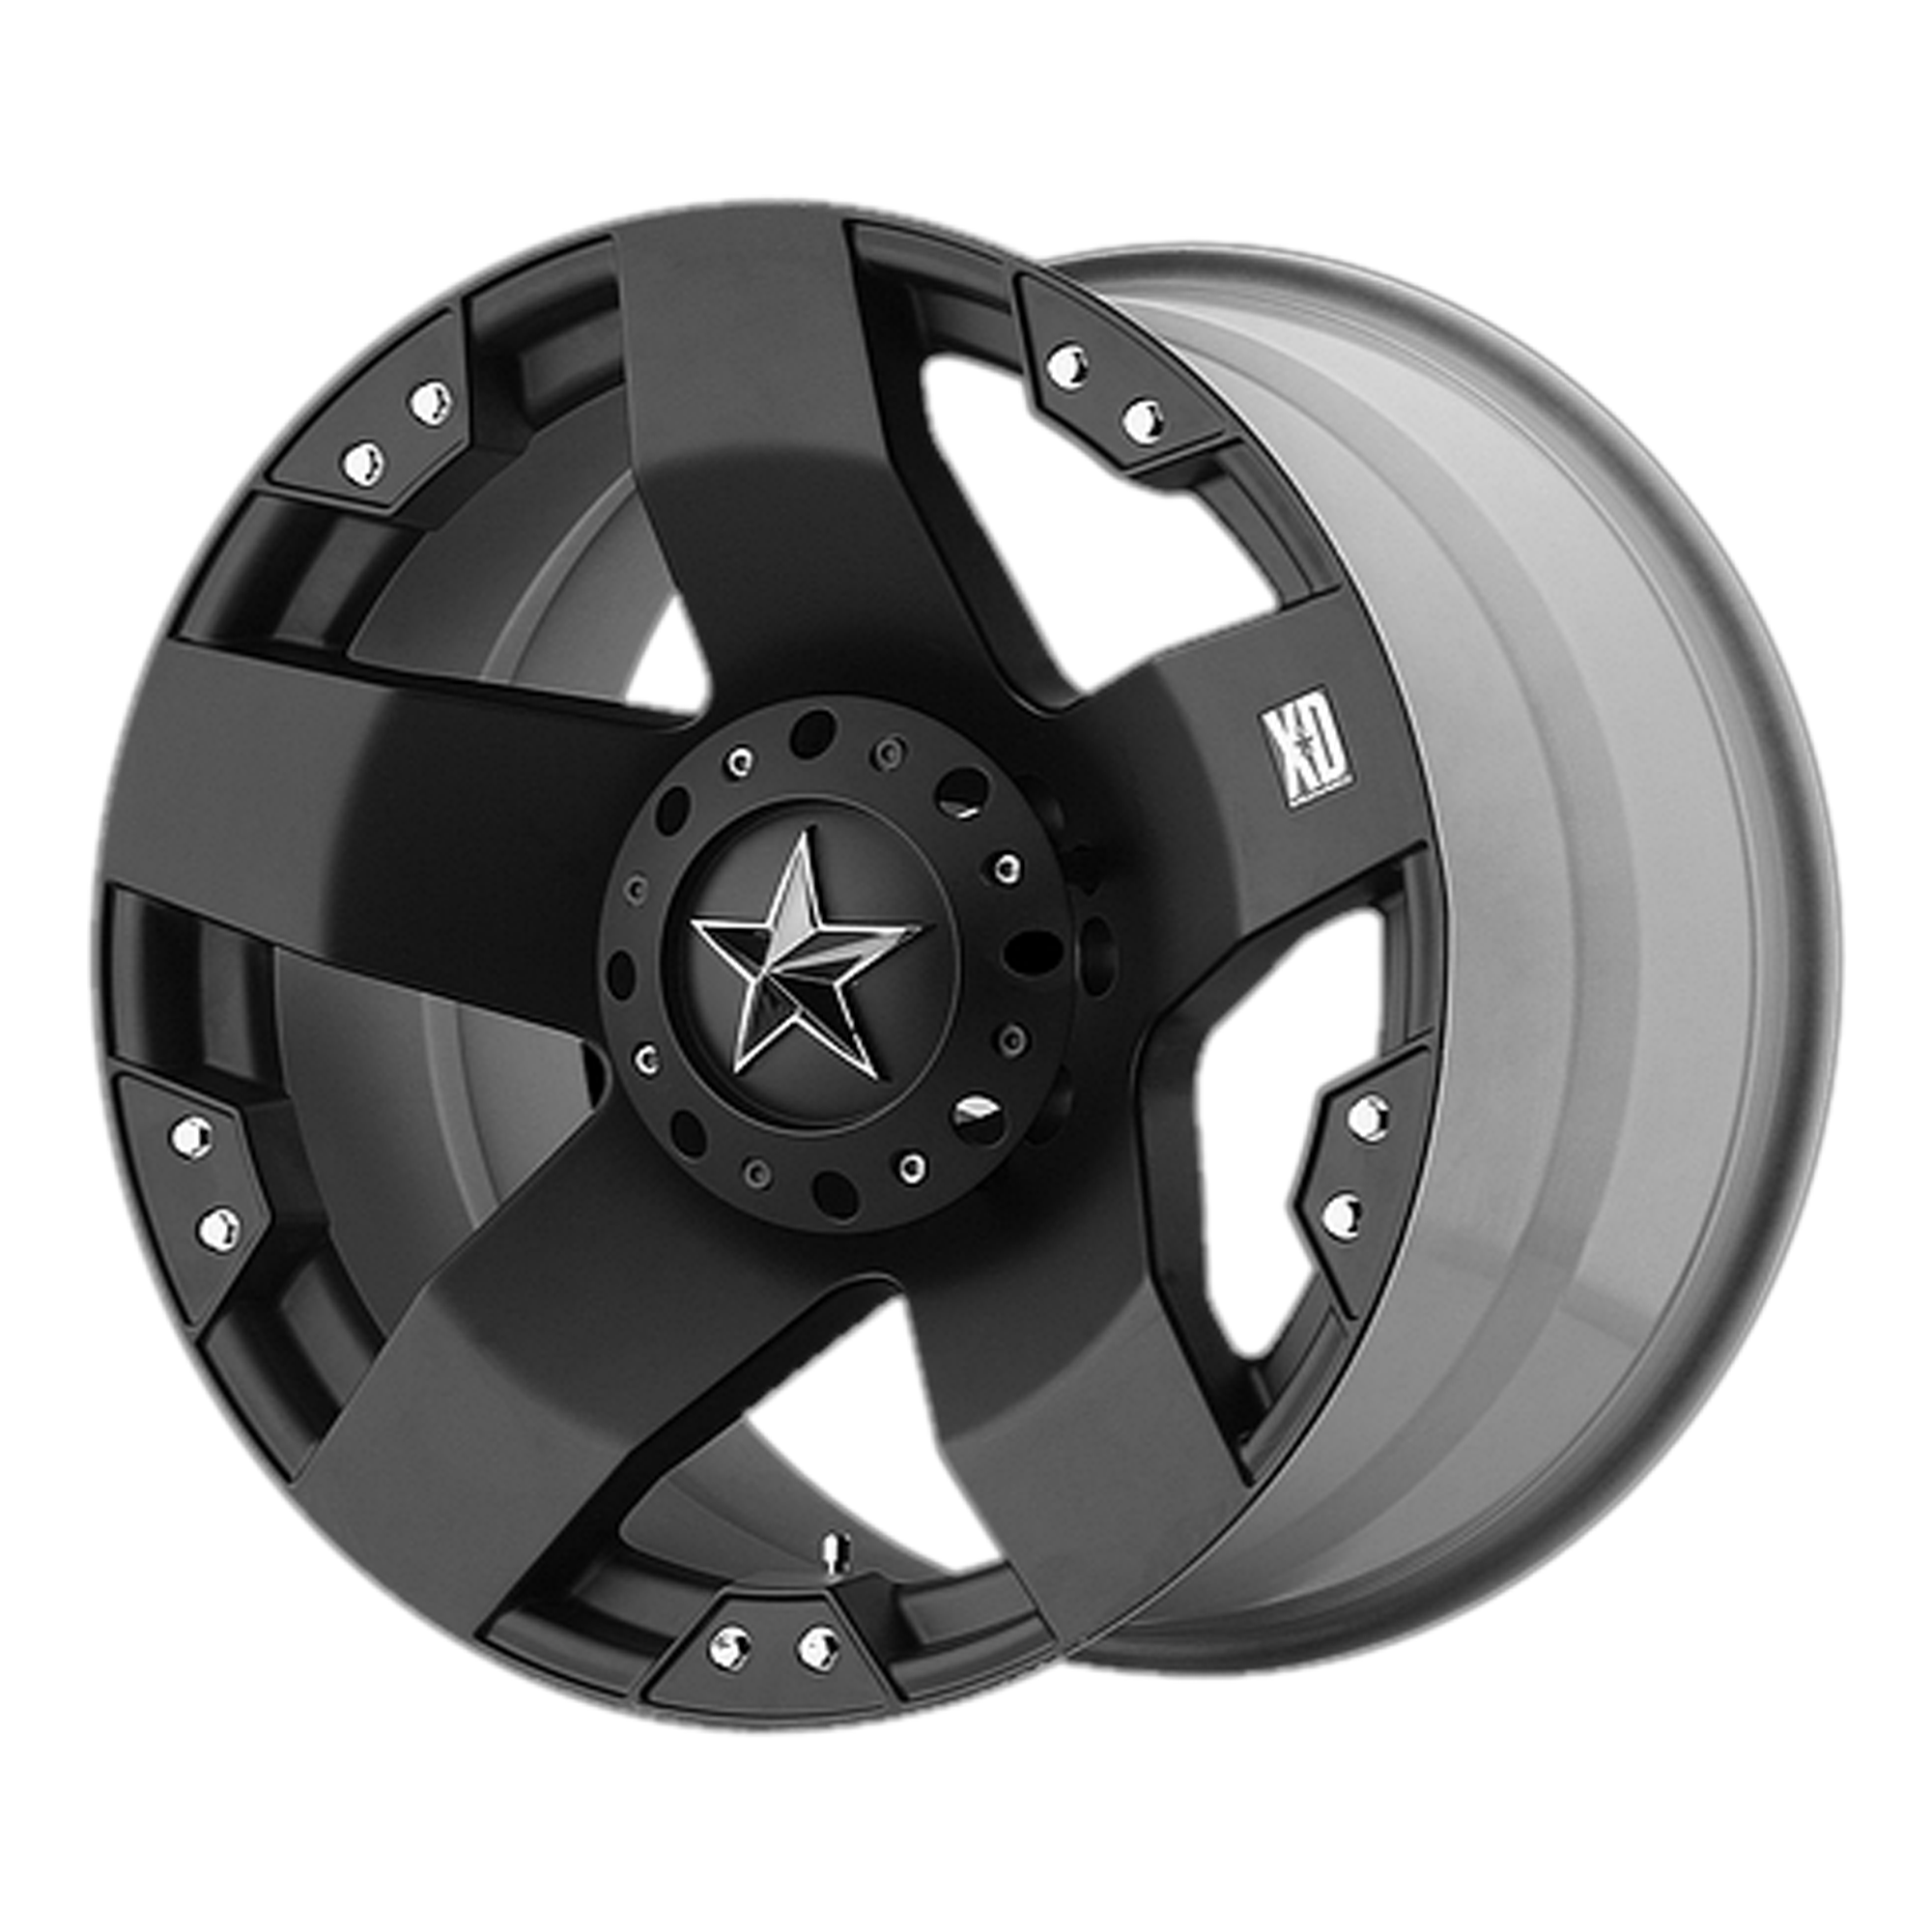 ROCKSTAR 18x9 8x170.00 MATTE BLACK (0 mm) - Tires and Engine Performance